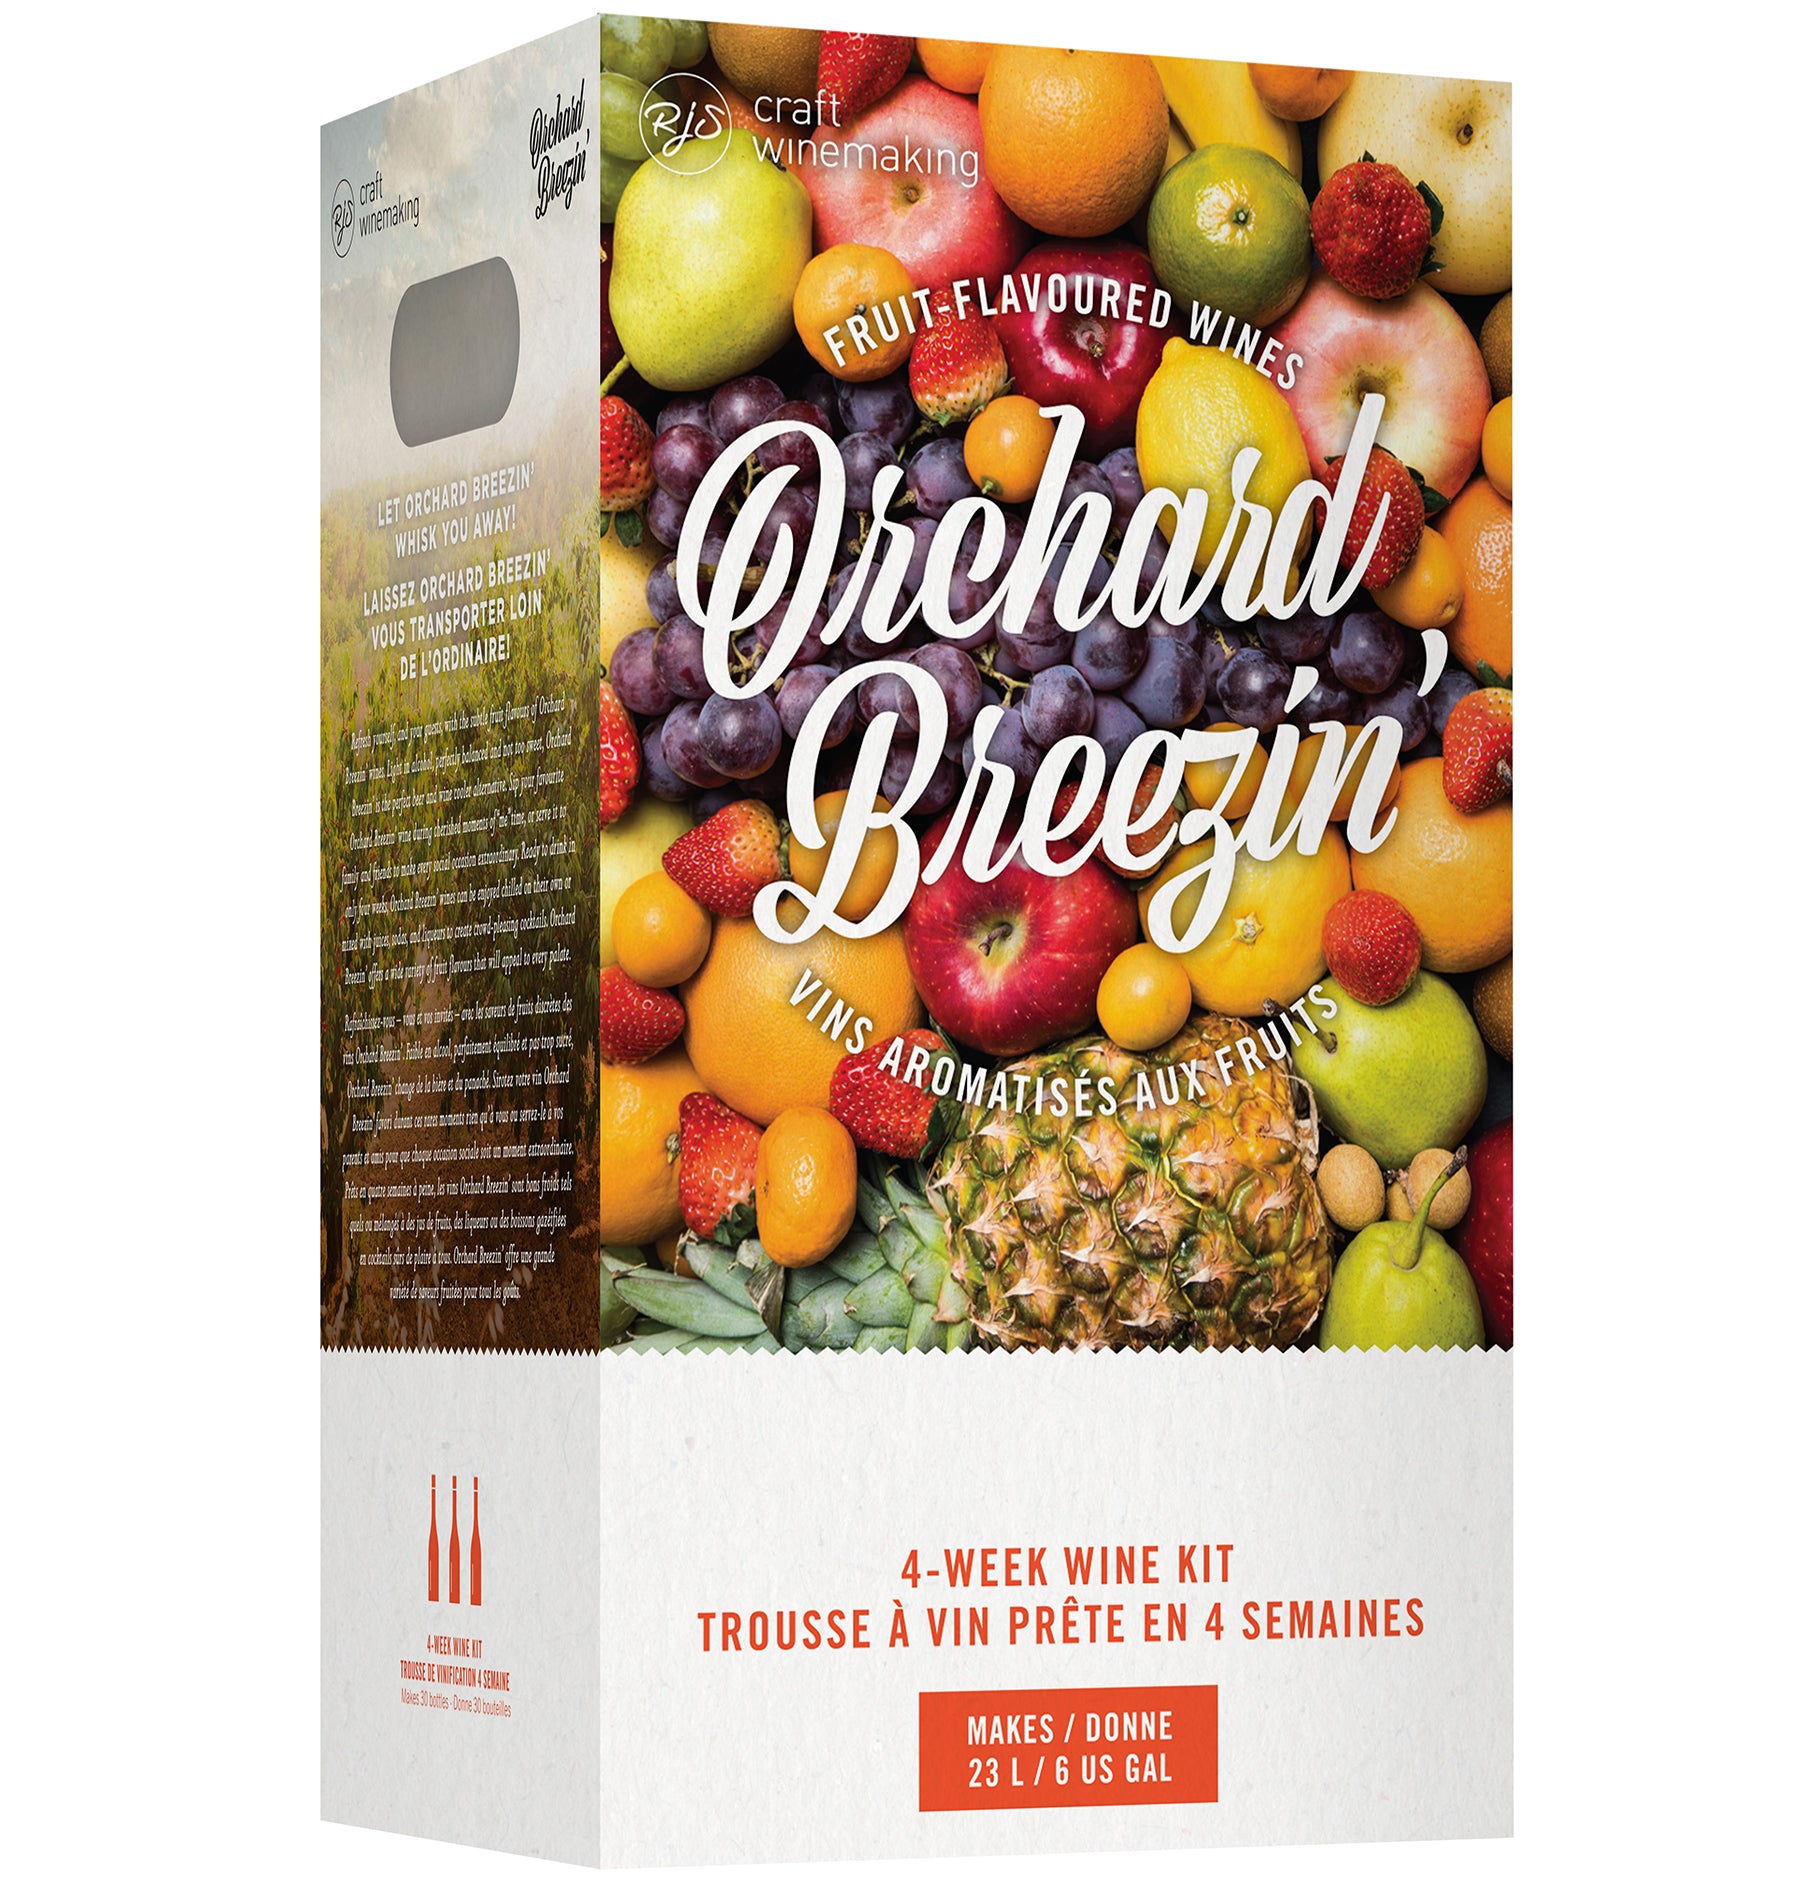 Orchard Breezin' Strawberry Sensation 6 Gallon Home Wine Making Ingredient Kit